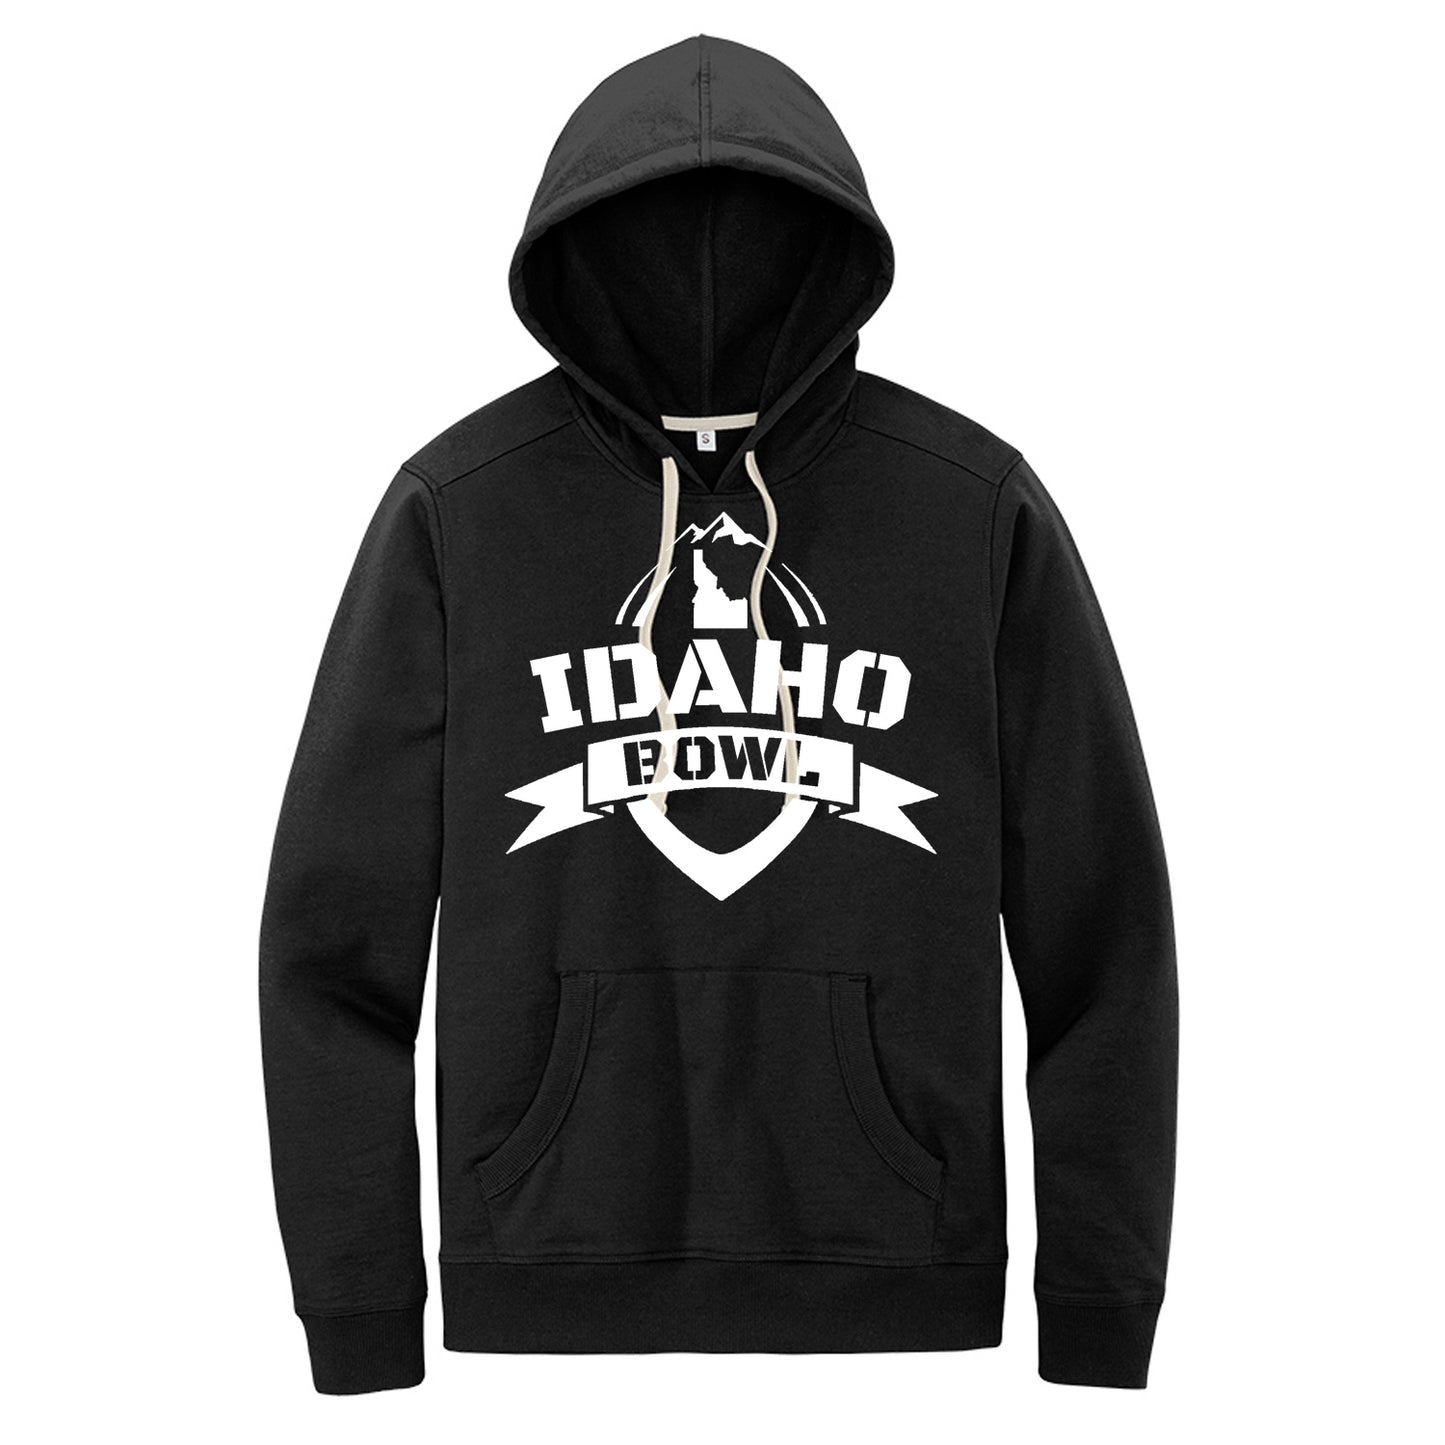 Idaho Bowl - Men's Fleece Hoodie - 2 colors available